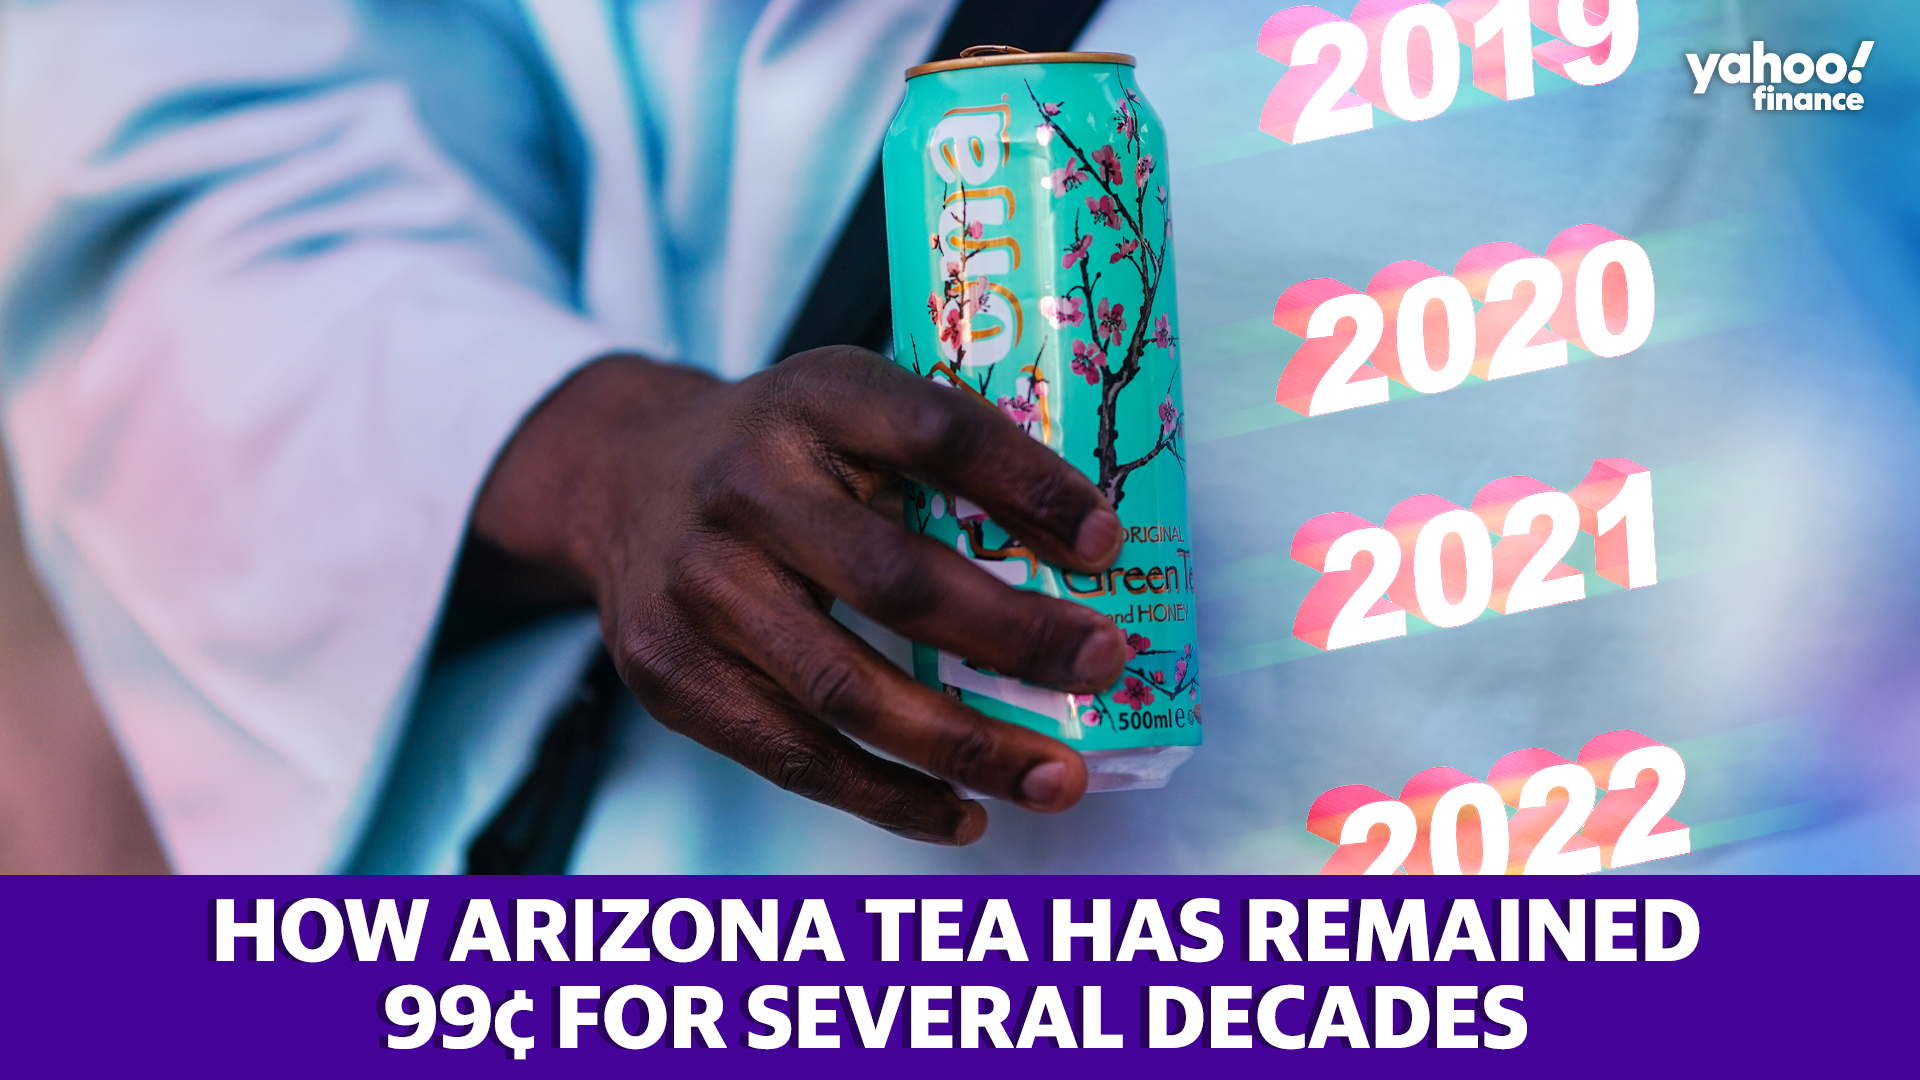 AriZona Beverages founder on AriZona iced tea's inflation-proof